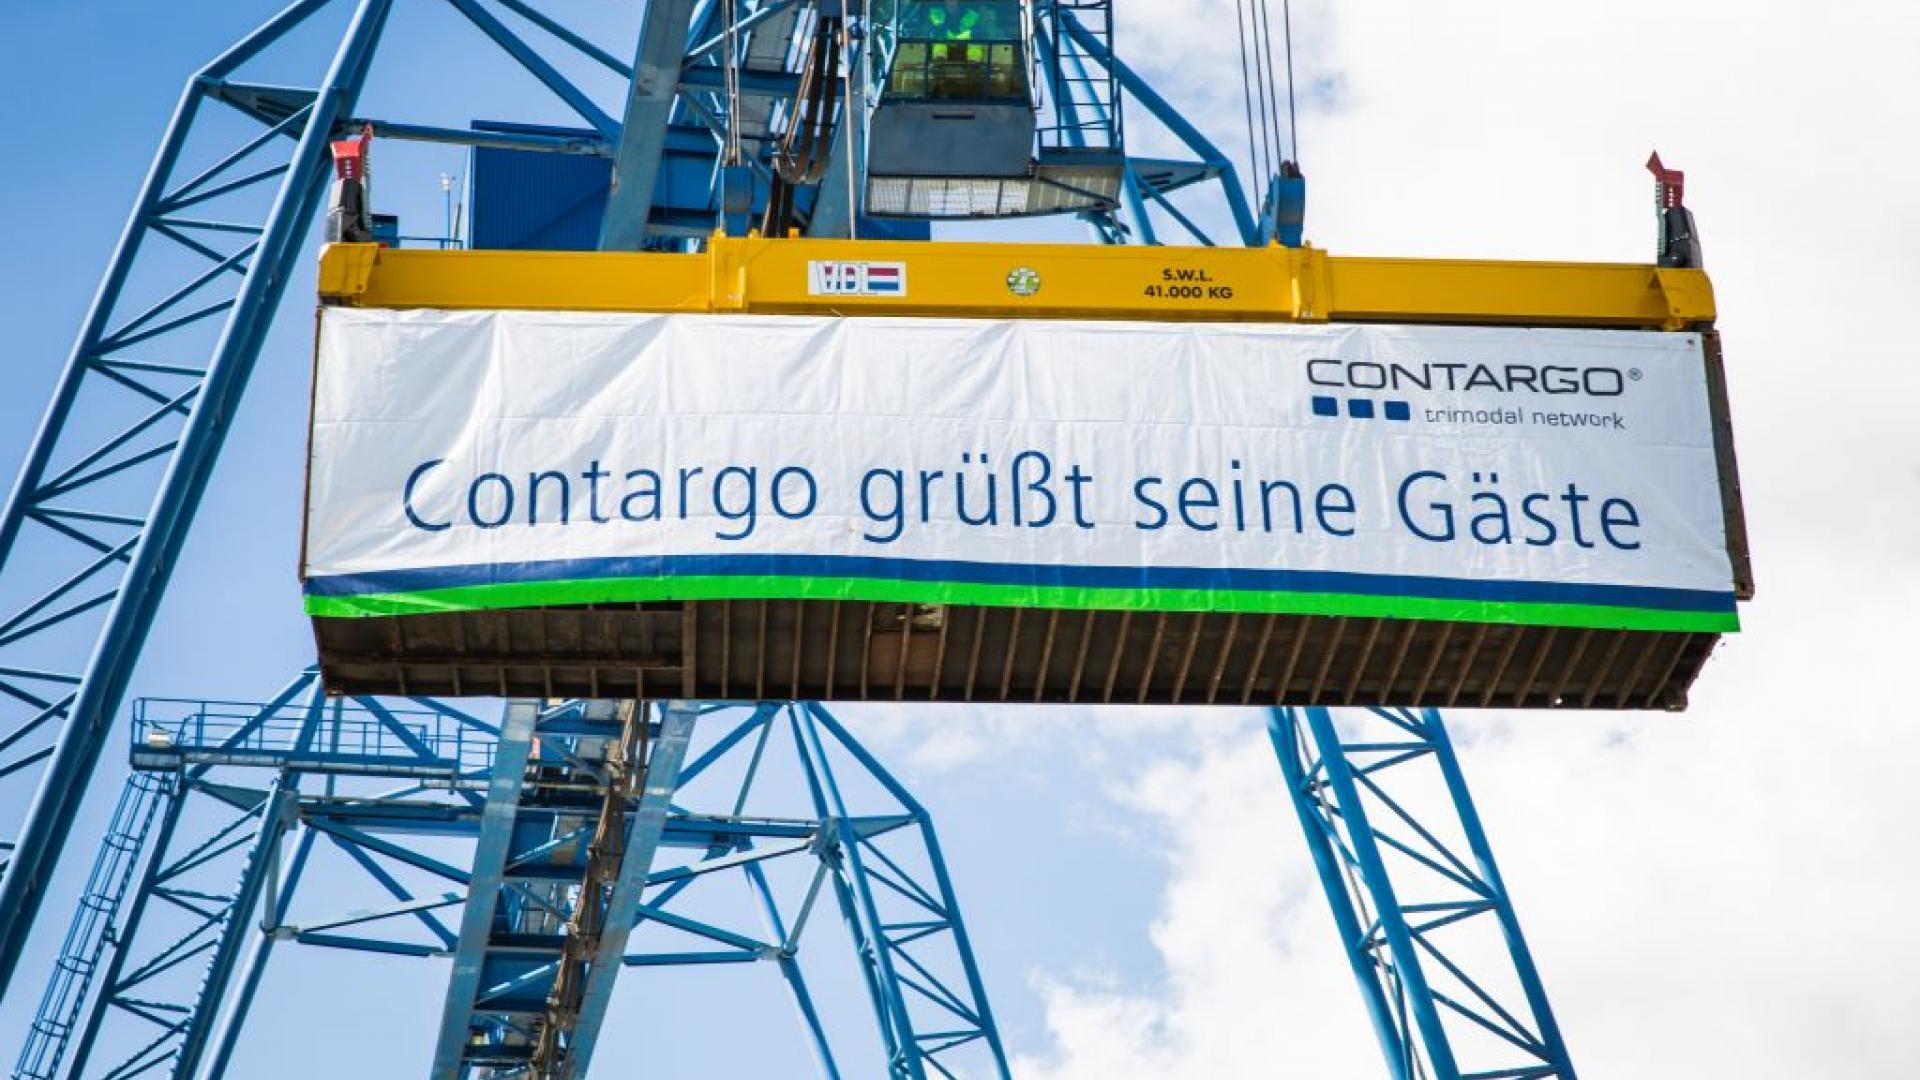 Containerterminal Emmelsum van Contargo